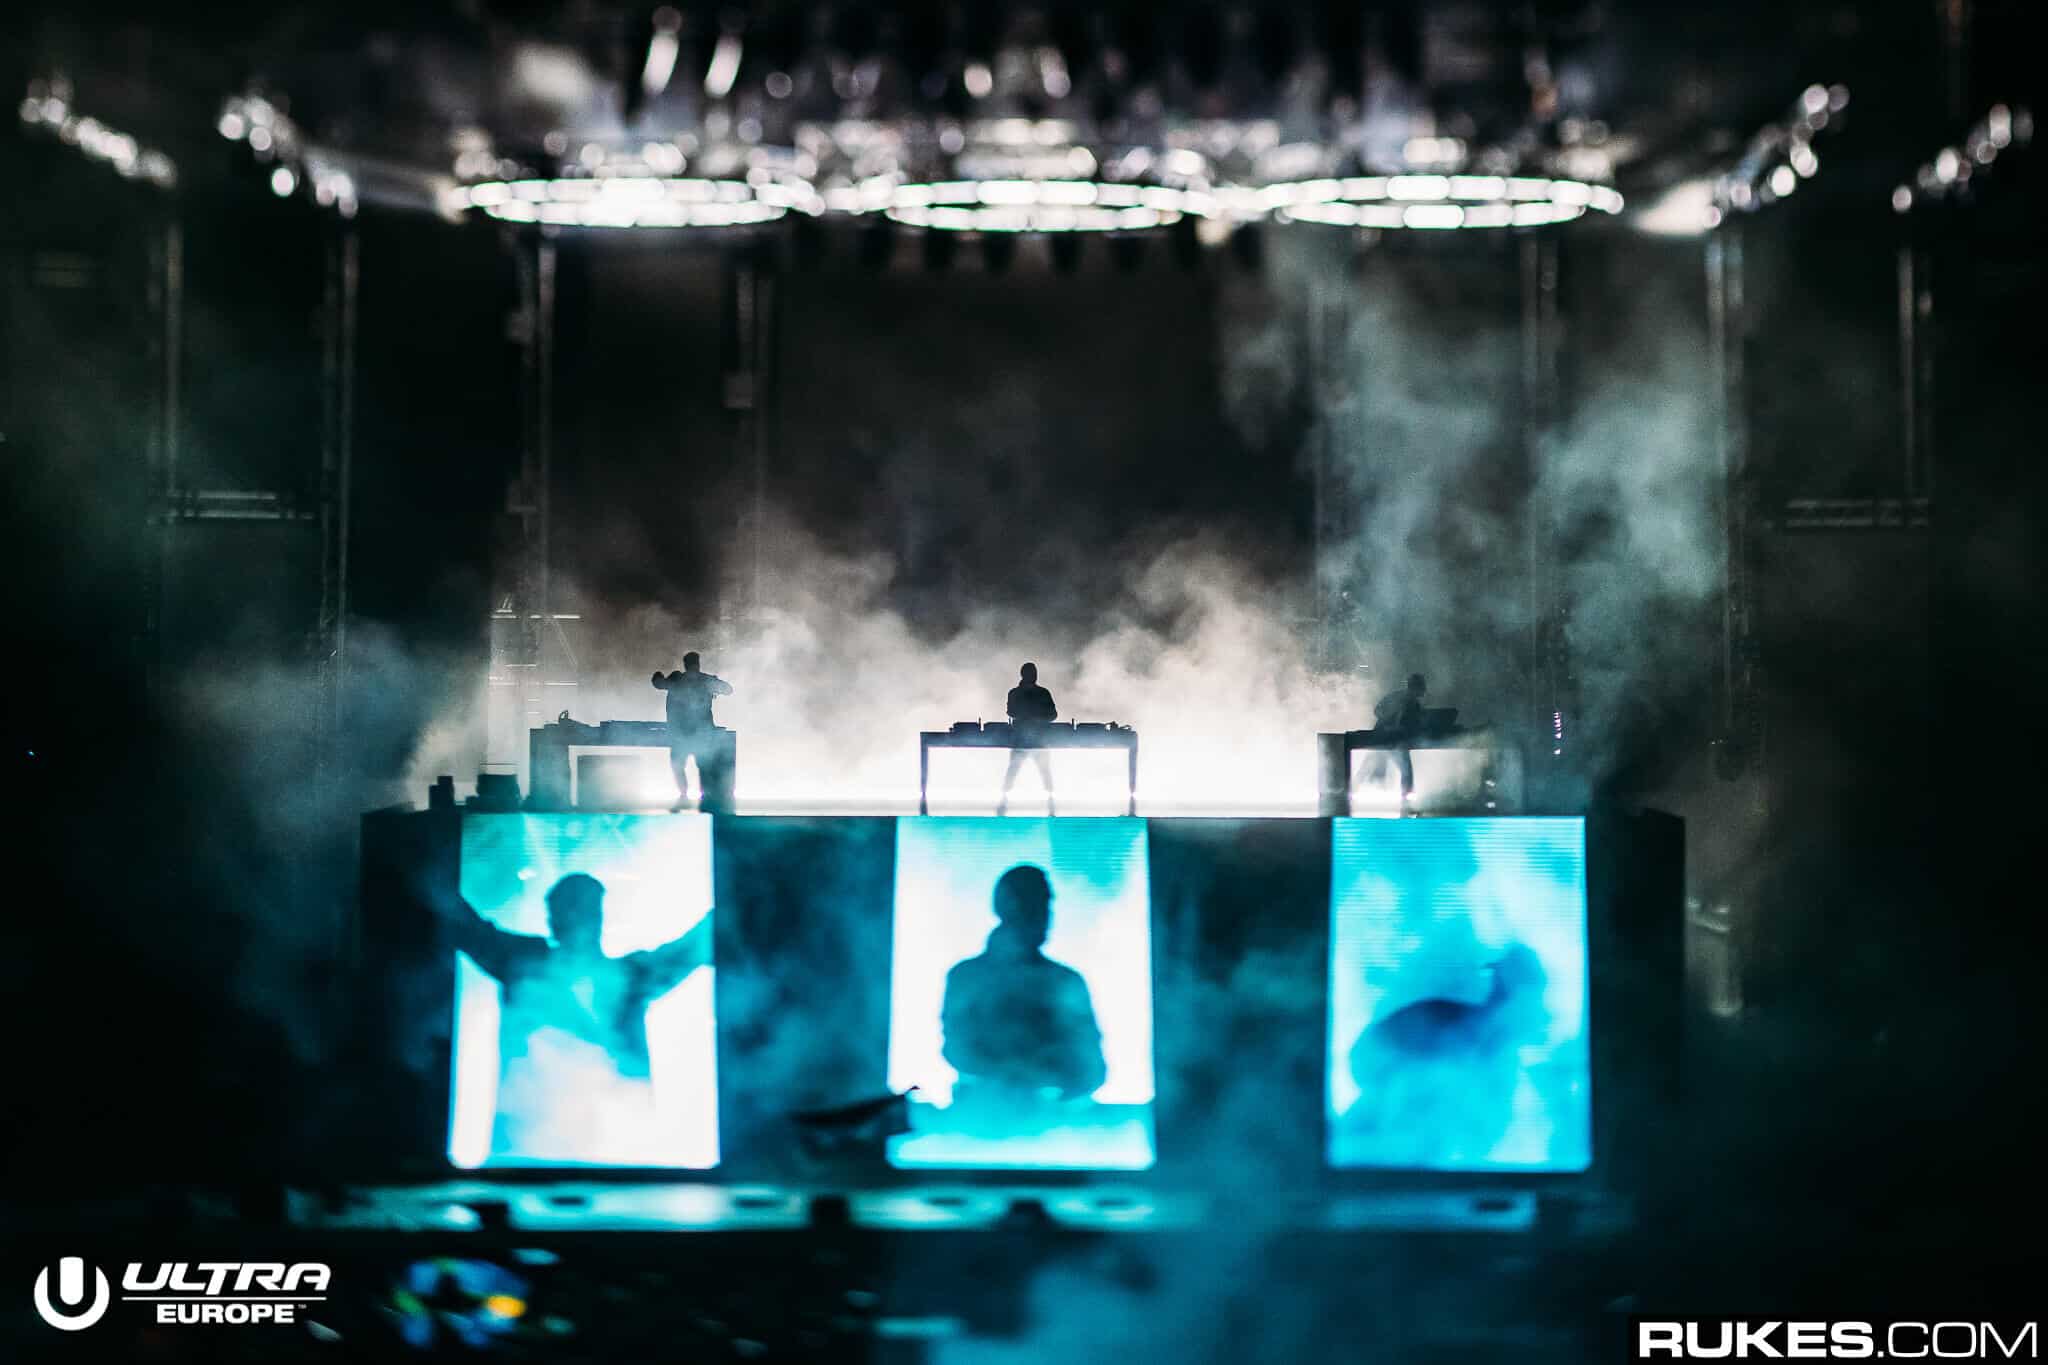 Swedish House Mafia share full Coachella 2022 set